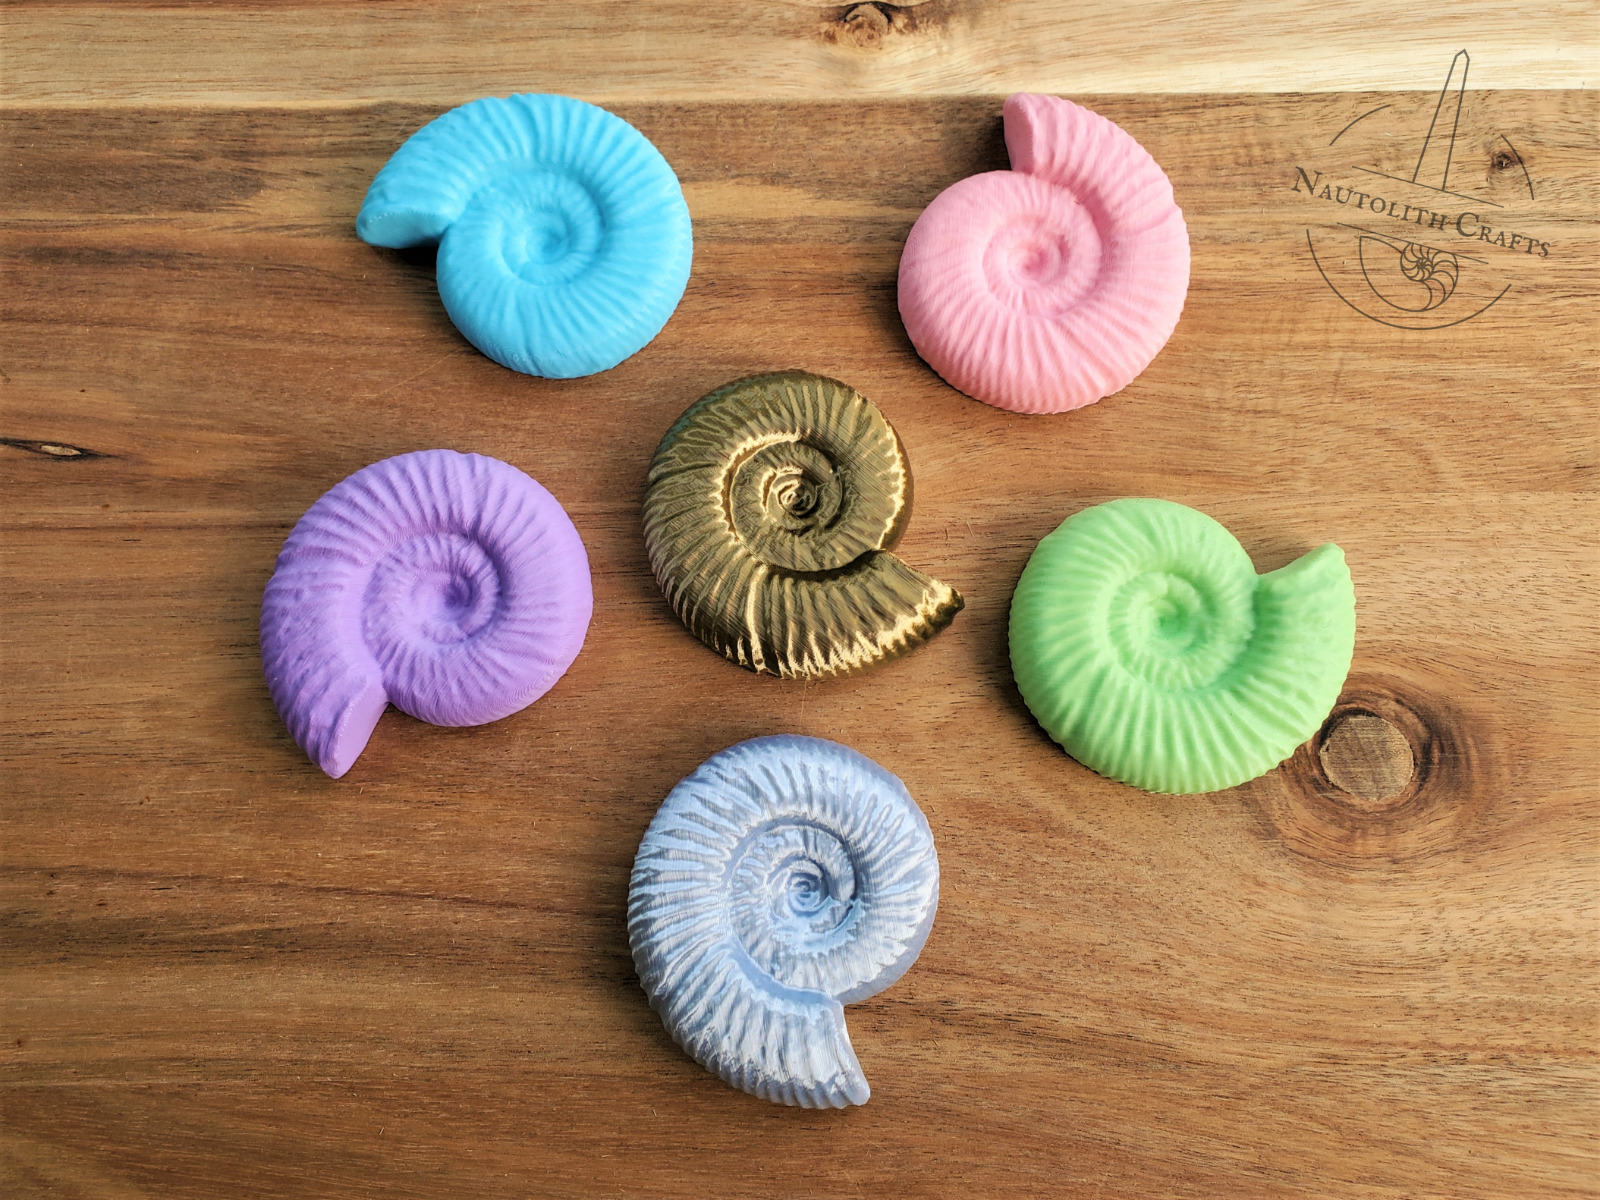 Ammonite Shell Fossil Magnet - Ancient Nautilus Replica Fridge Sea Decor Gift